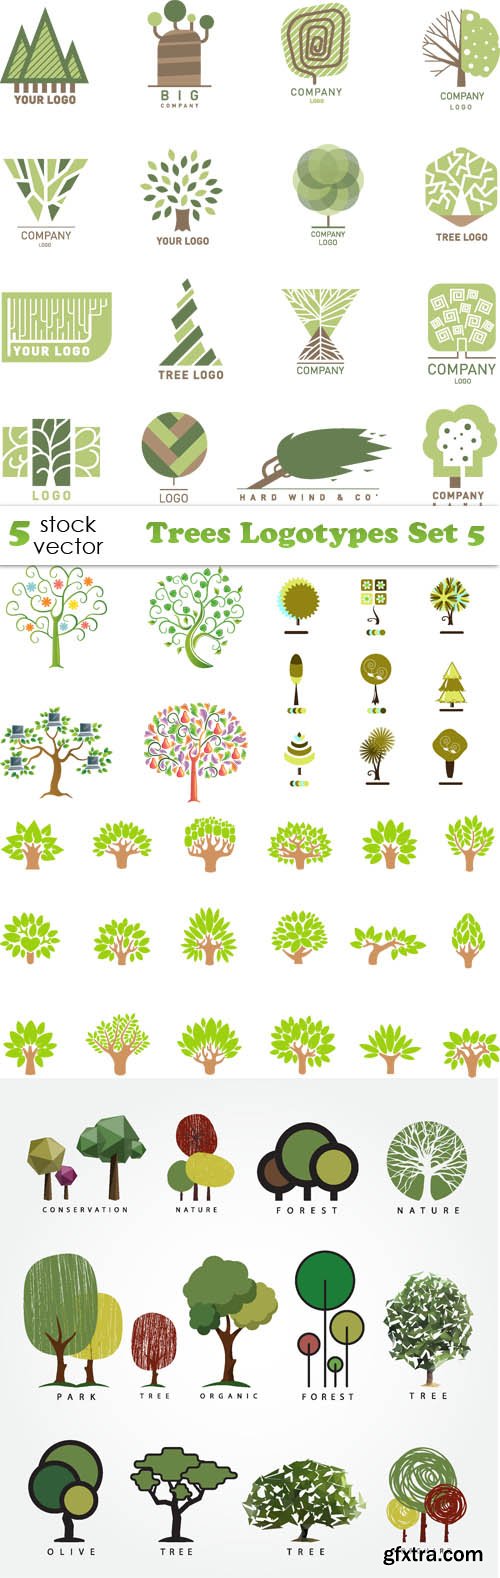 Vectors - Trees Logotypes Set 5